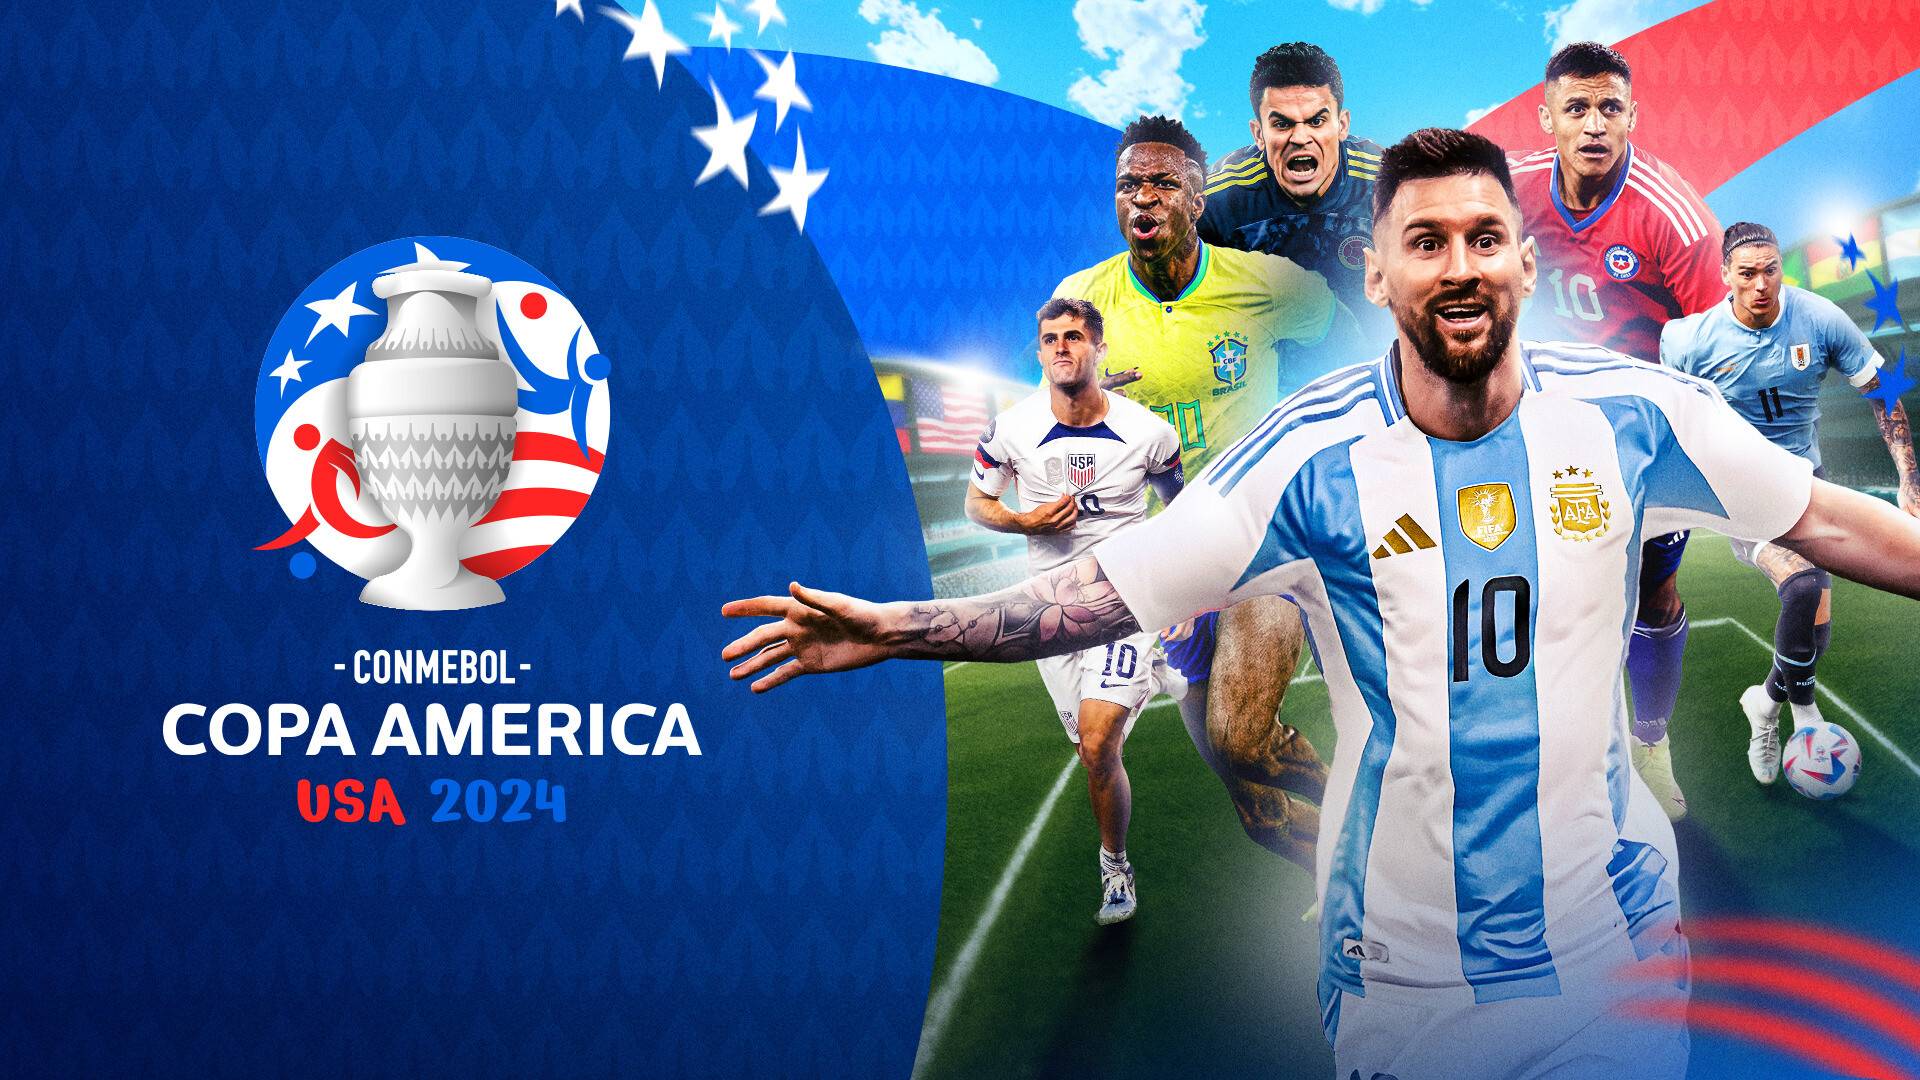 Live Streaming Colombia vs Paraguay CONMEBOL Copa America USA 2024